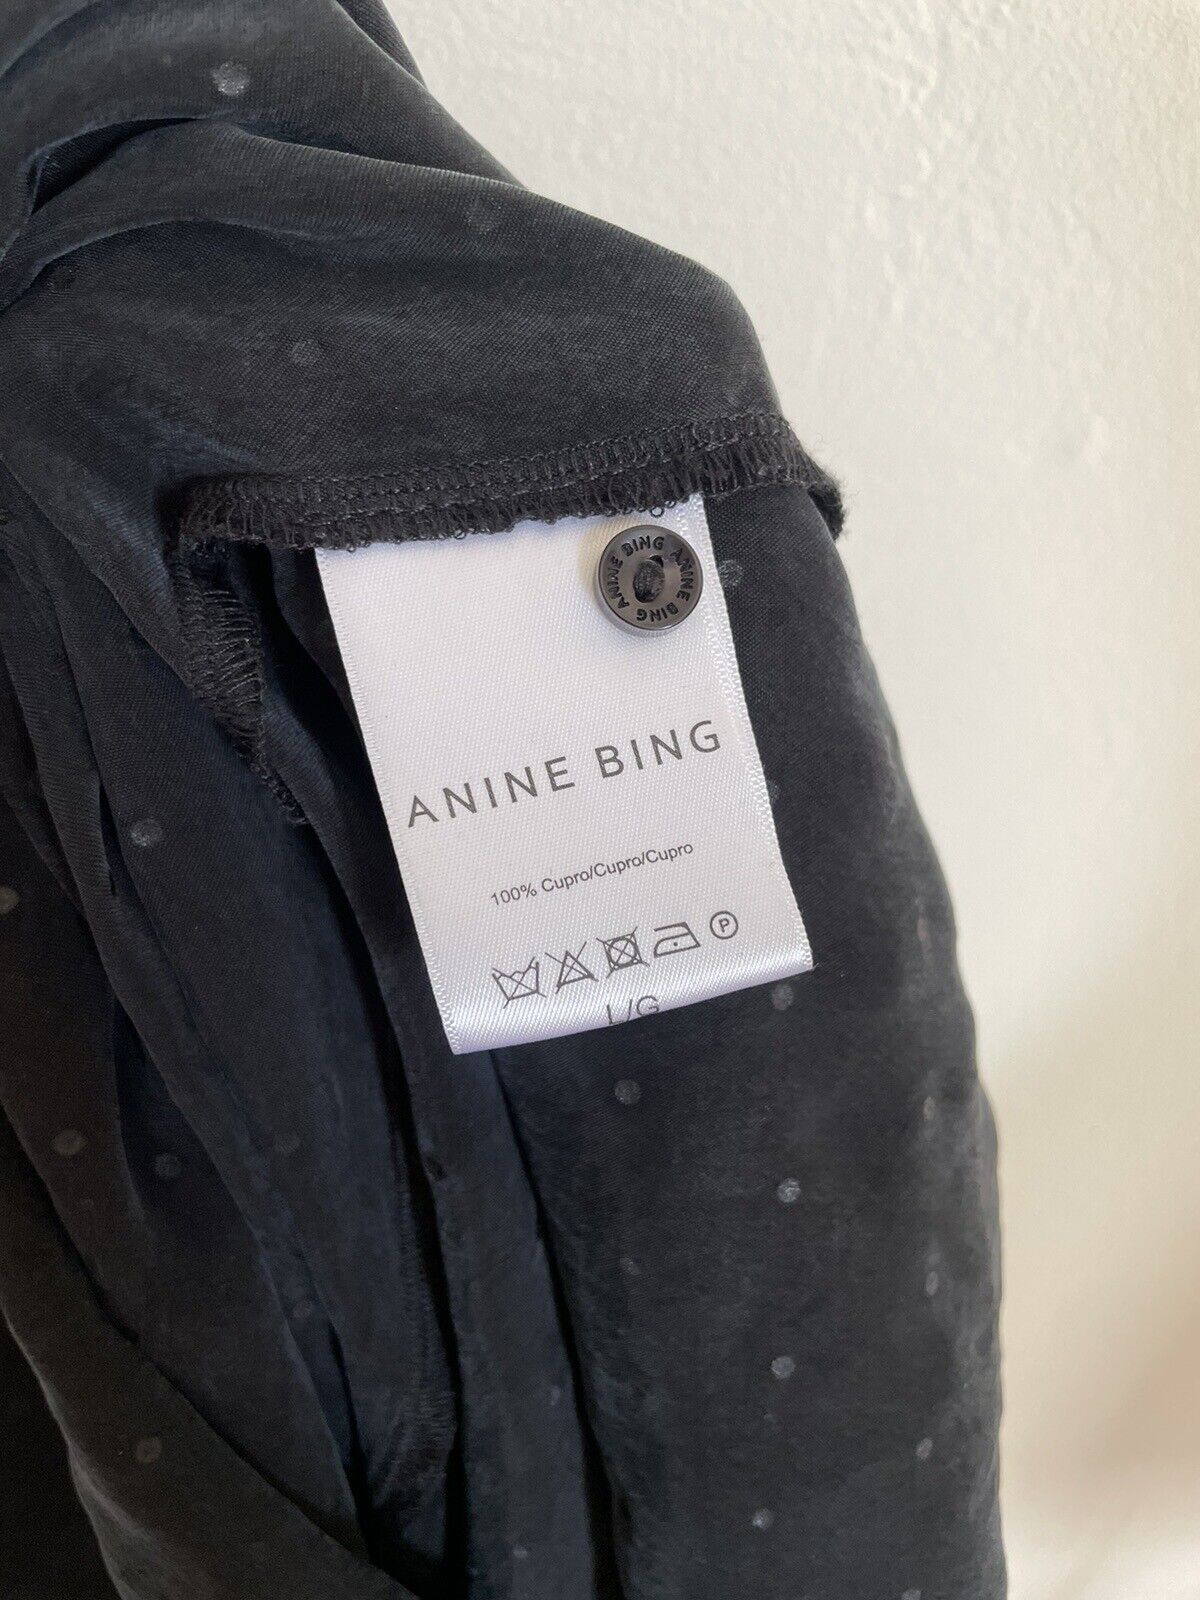 Anine Bing Dress Long Sleeve Black Stud Rhineston… - image 7